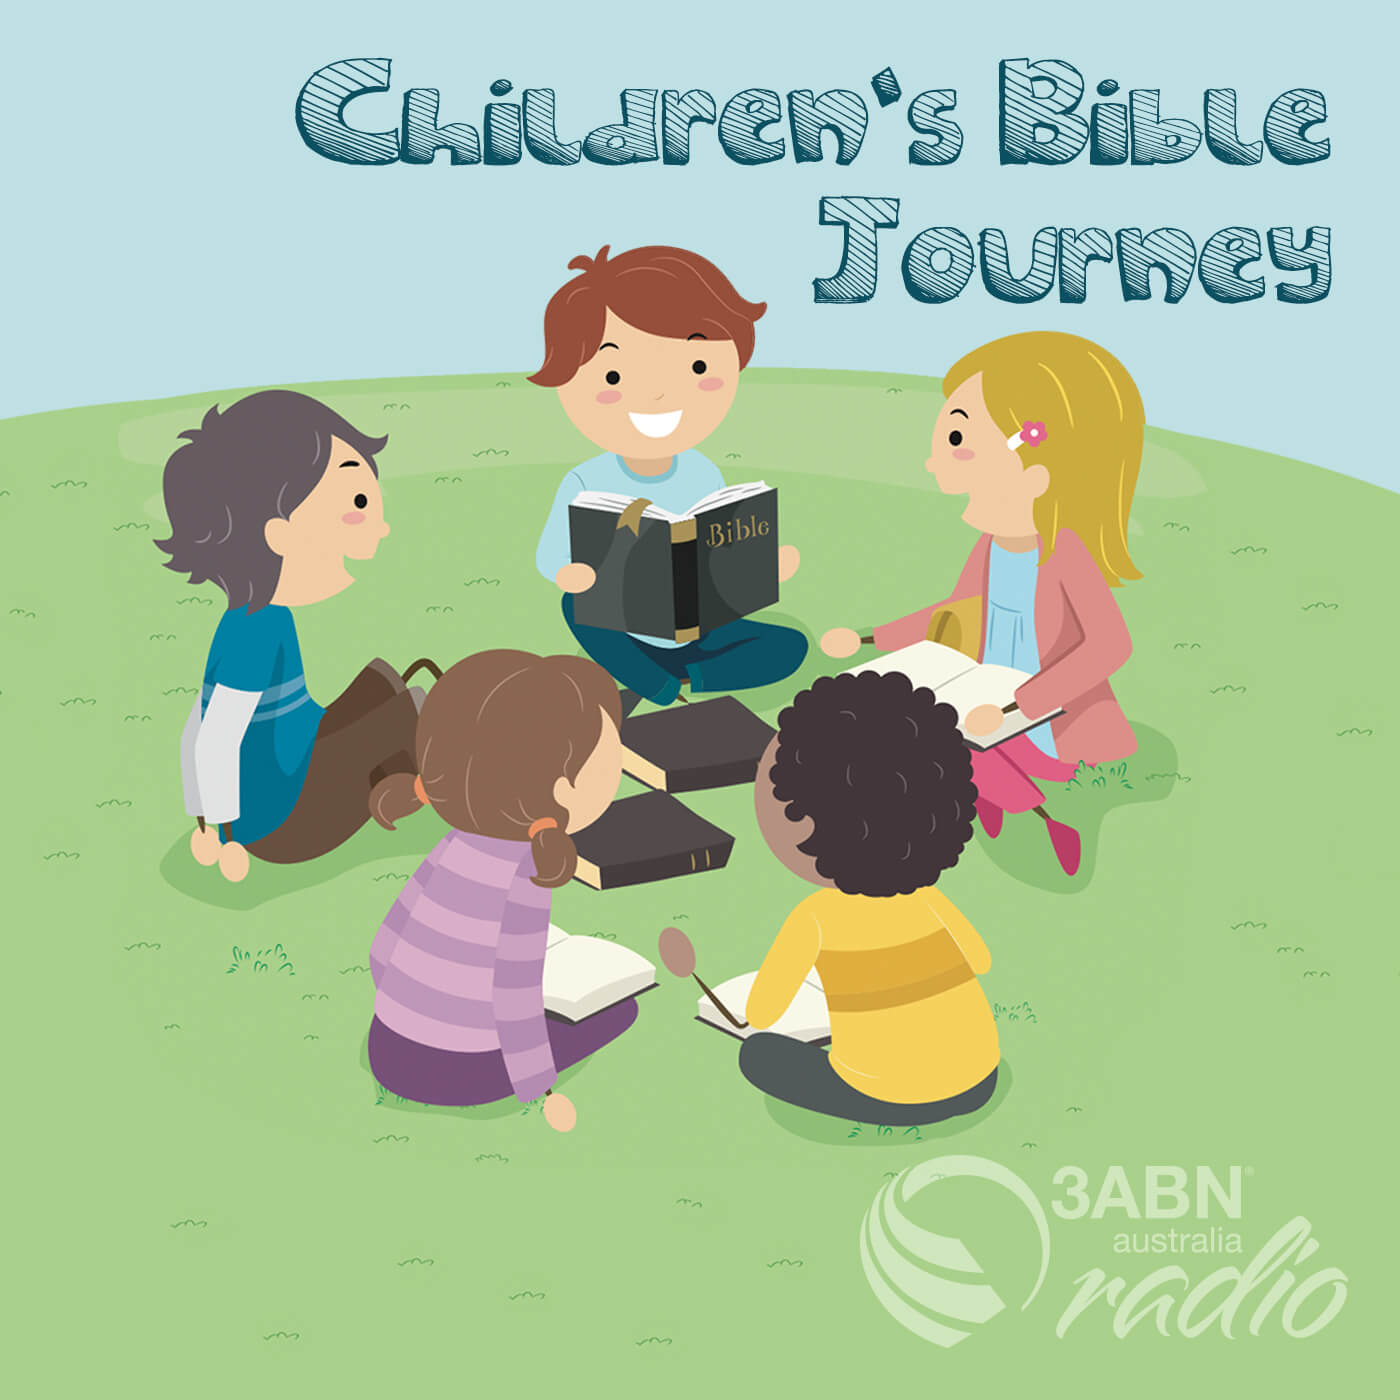 Children's Bible Journey - 2185